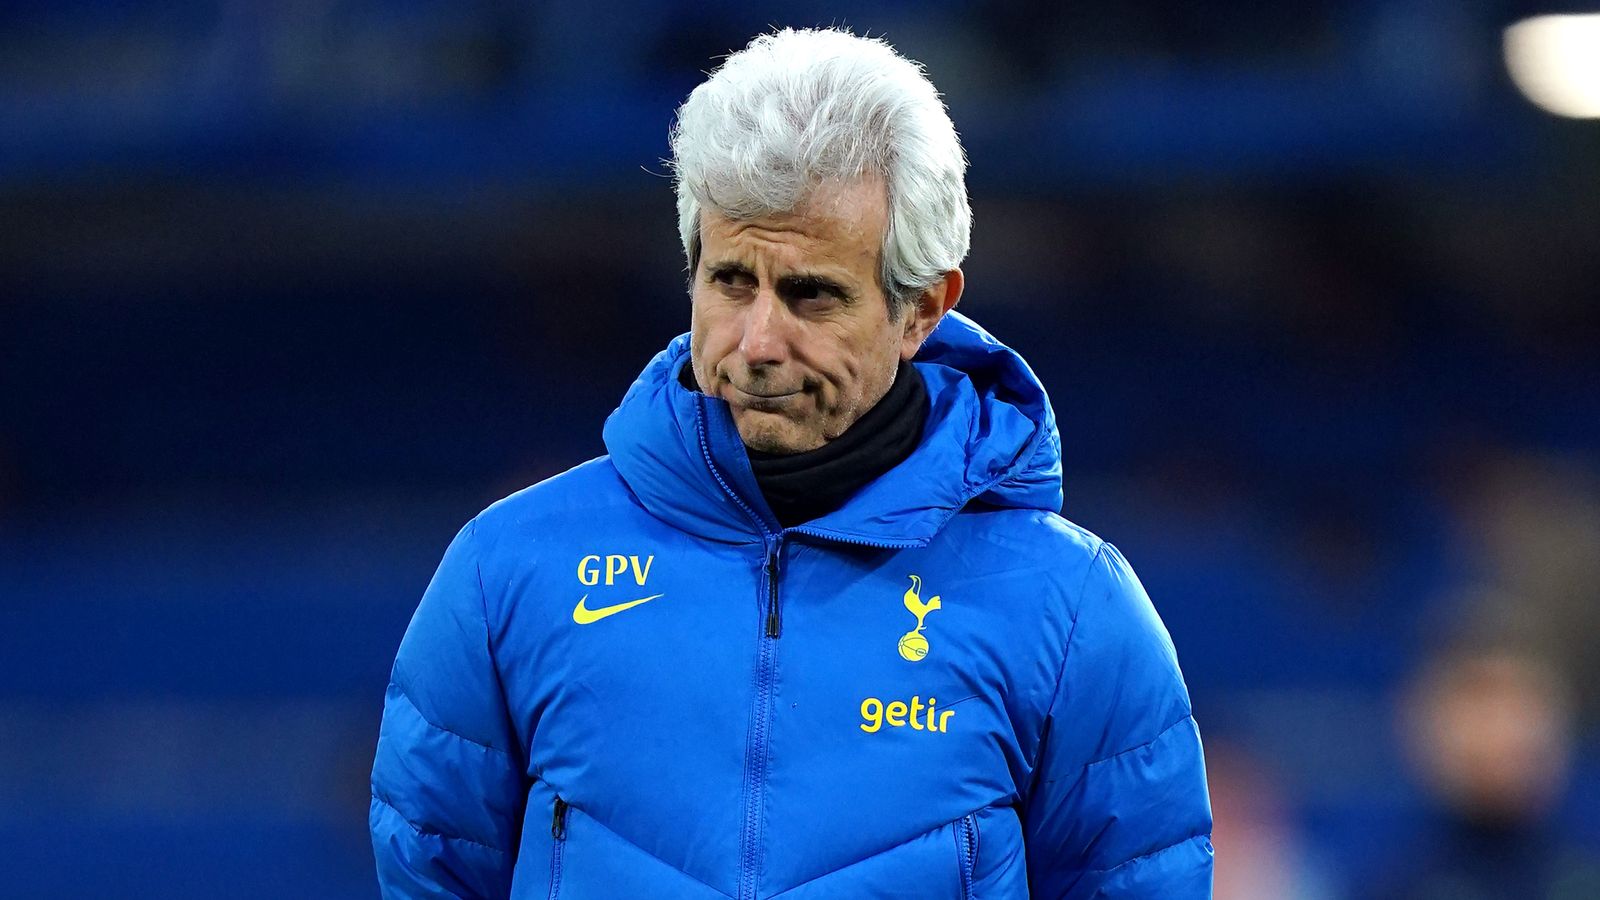 Tottenham's fitness coach Gian Piero Ventrone dies aged 61